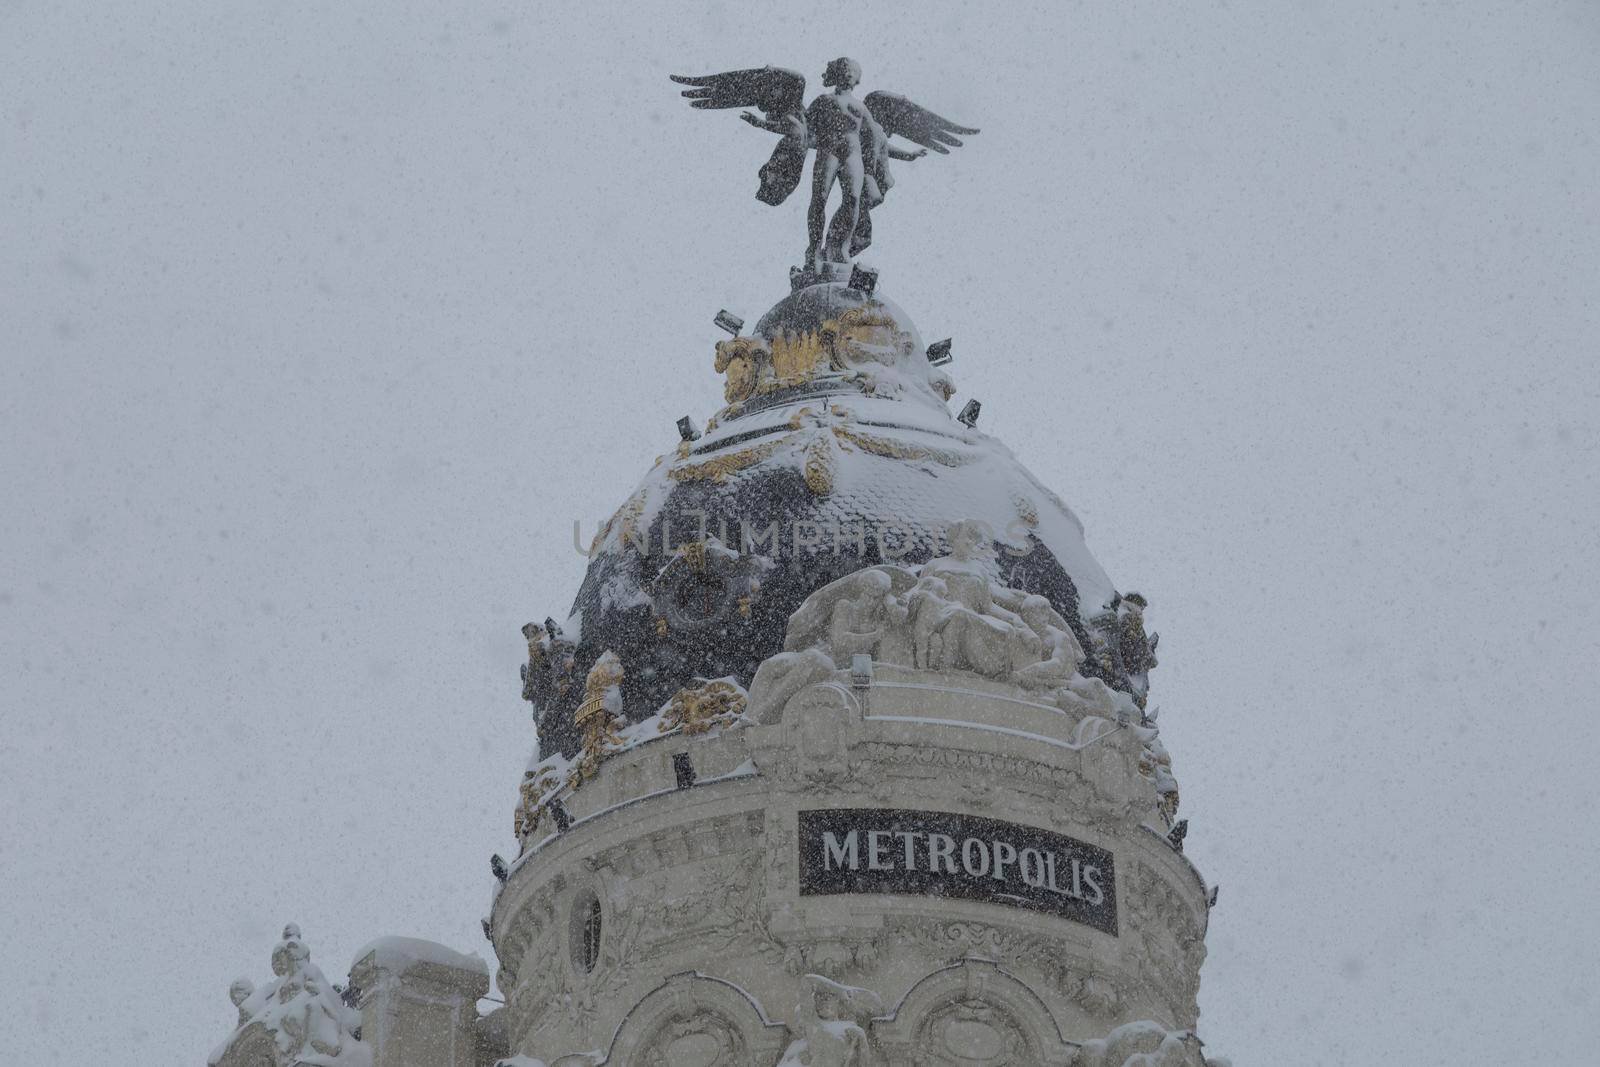 Metropolis building on a snowy day, Madrid. by alvarobueno